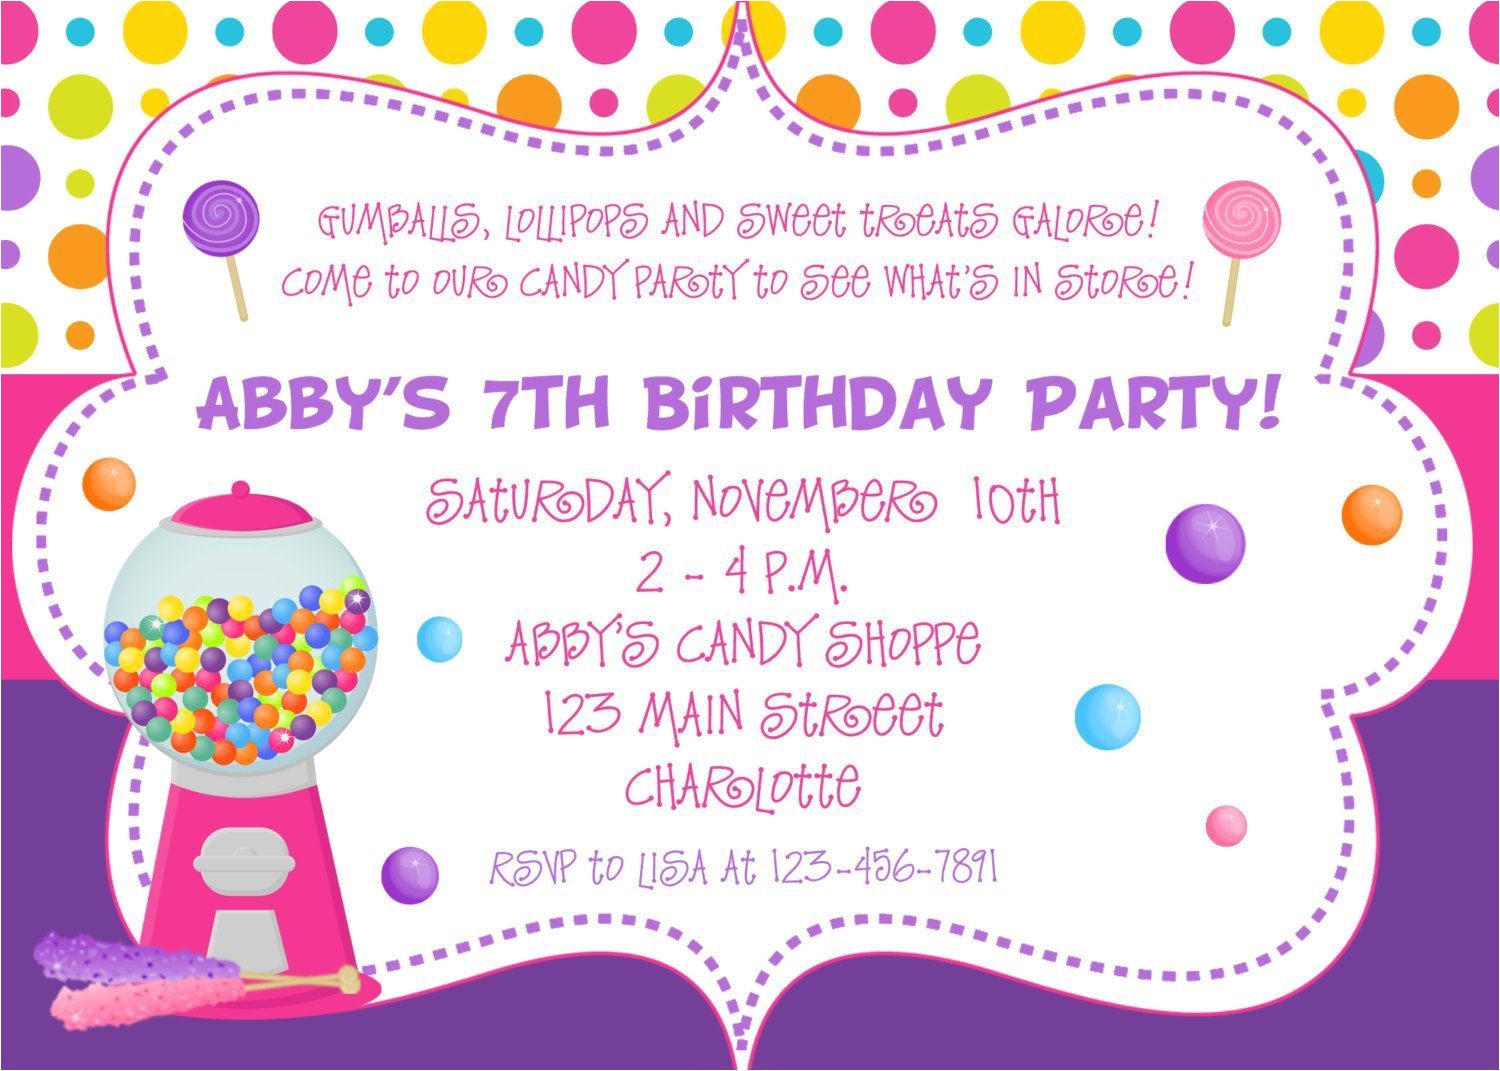 Birthday Invitation Sms for Adults Birthday Party Invitation Sms for Adults Gallery